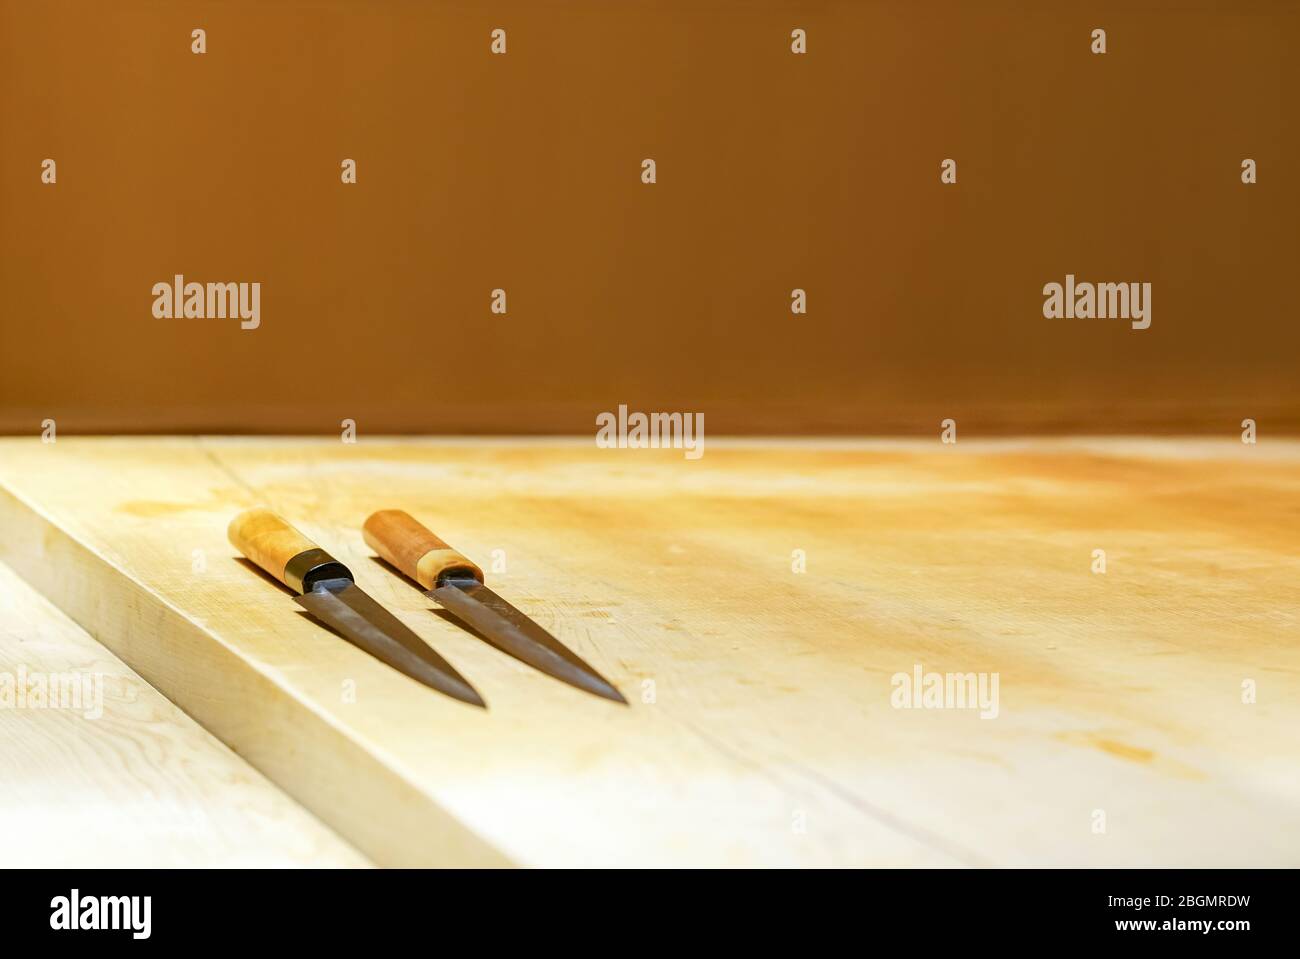 2 sushi knives on a wooden counter. Enjoy Omakase experience at Japanese Sushi Restaurant. Stock Photo